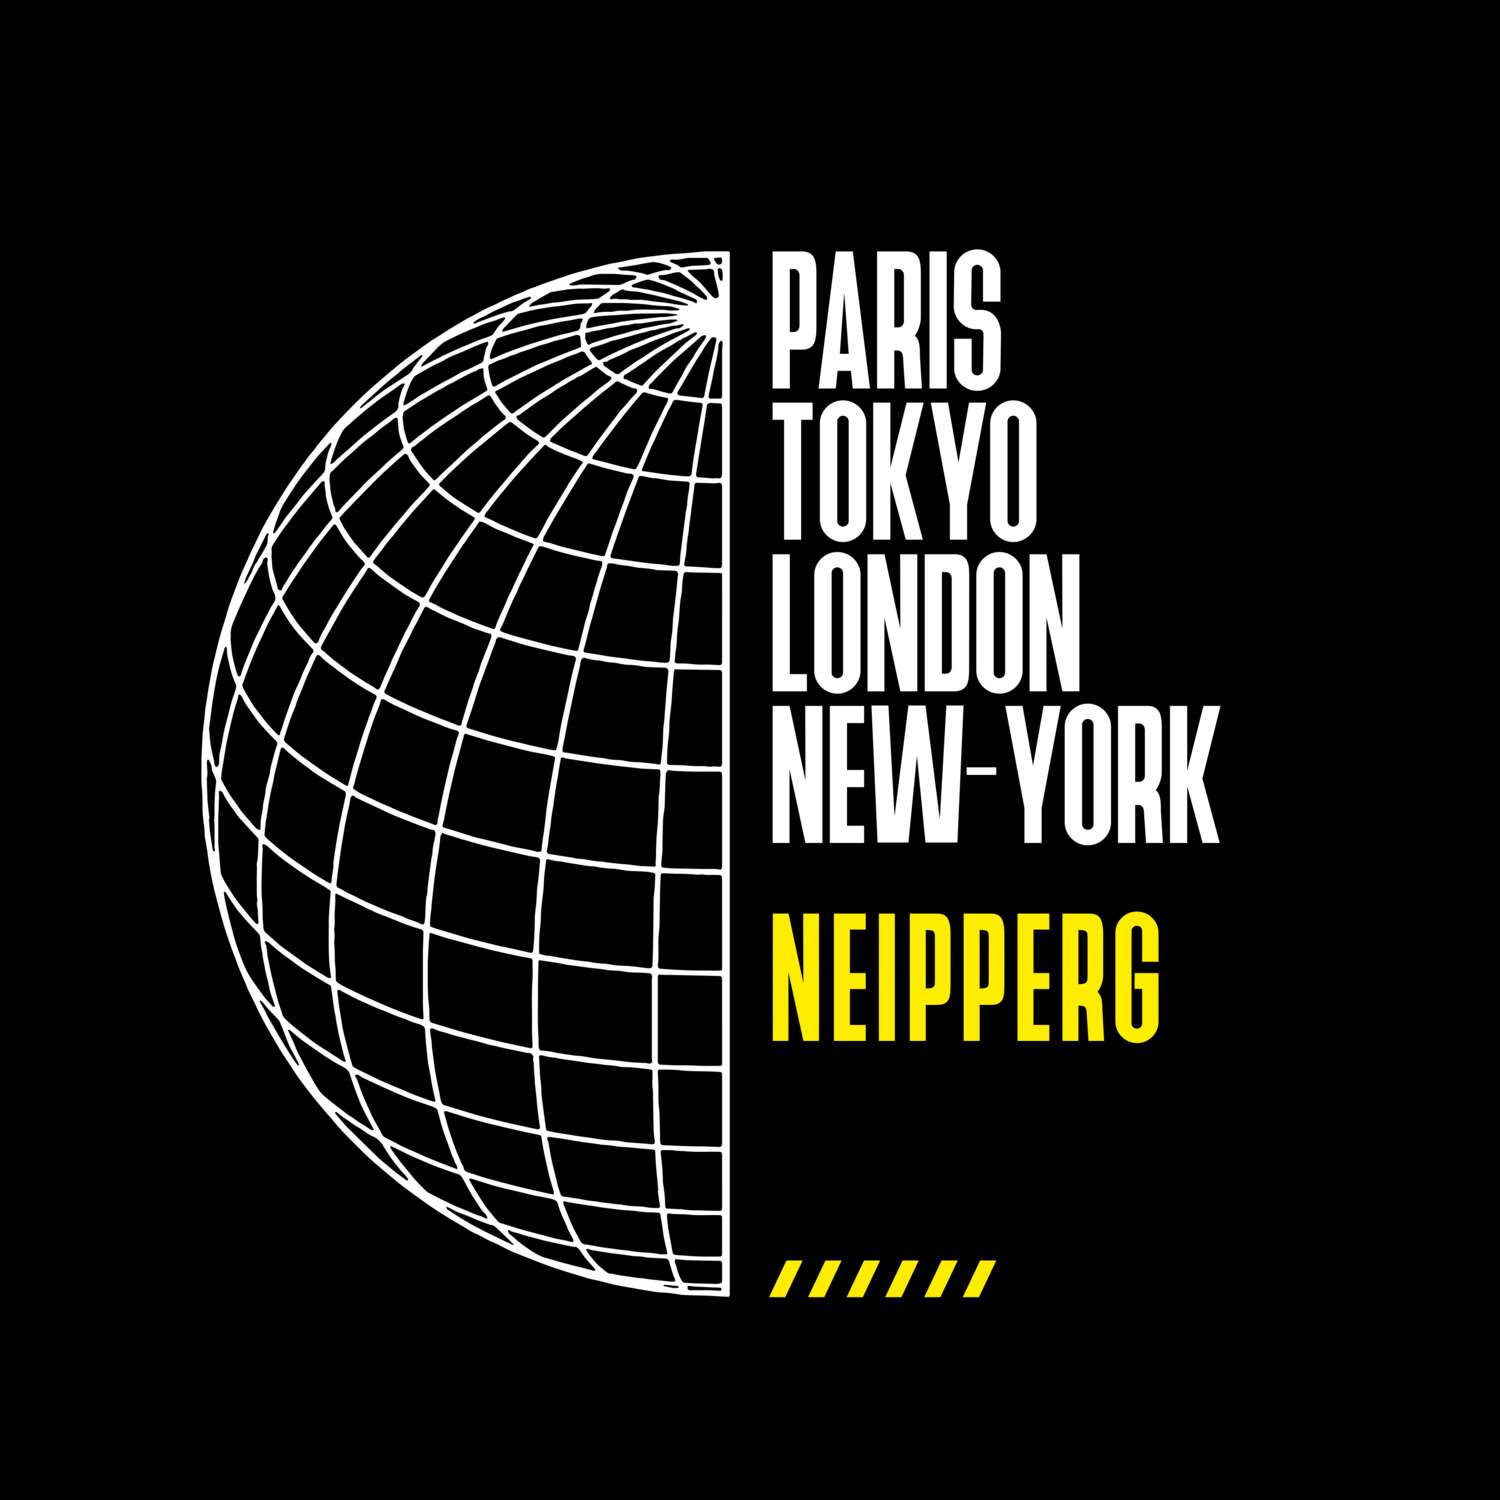 Neipperg T-Shirt »Paris Tokyo London«